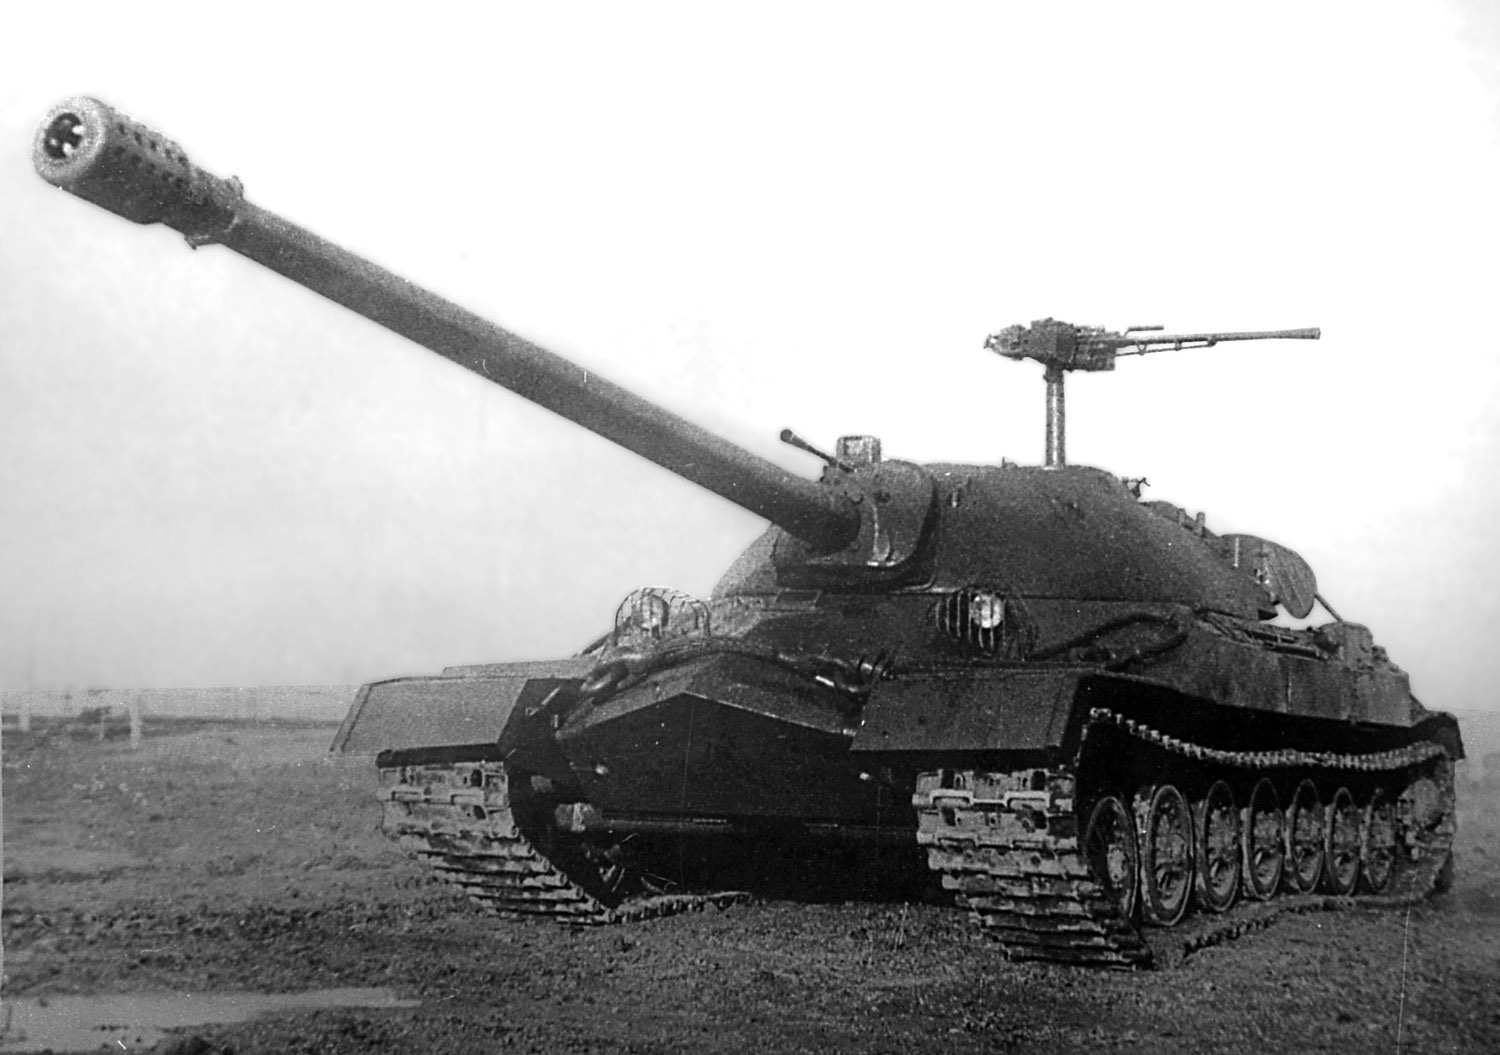 Ис ут. Танк ИС-7. Тяжелые танки СССР ис7. ИС-7 тяжёлый танк. ИС 7 Калибр пушки.